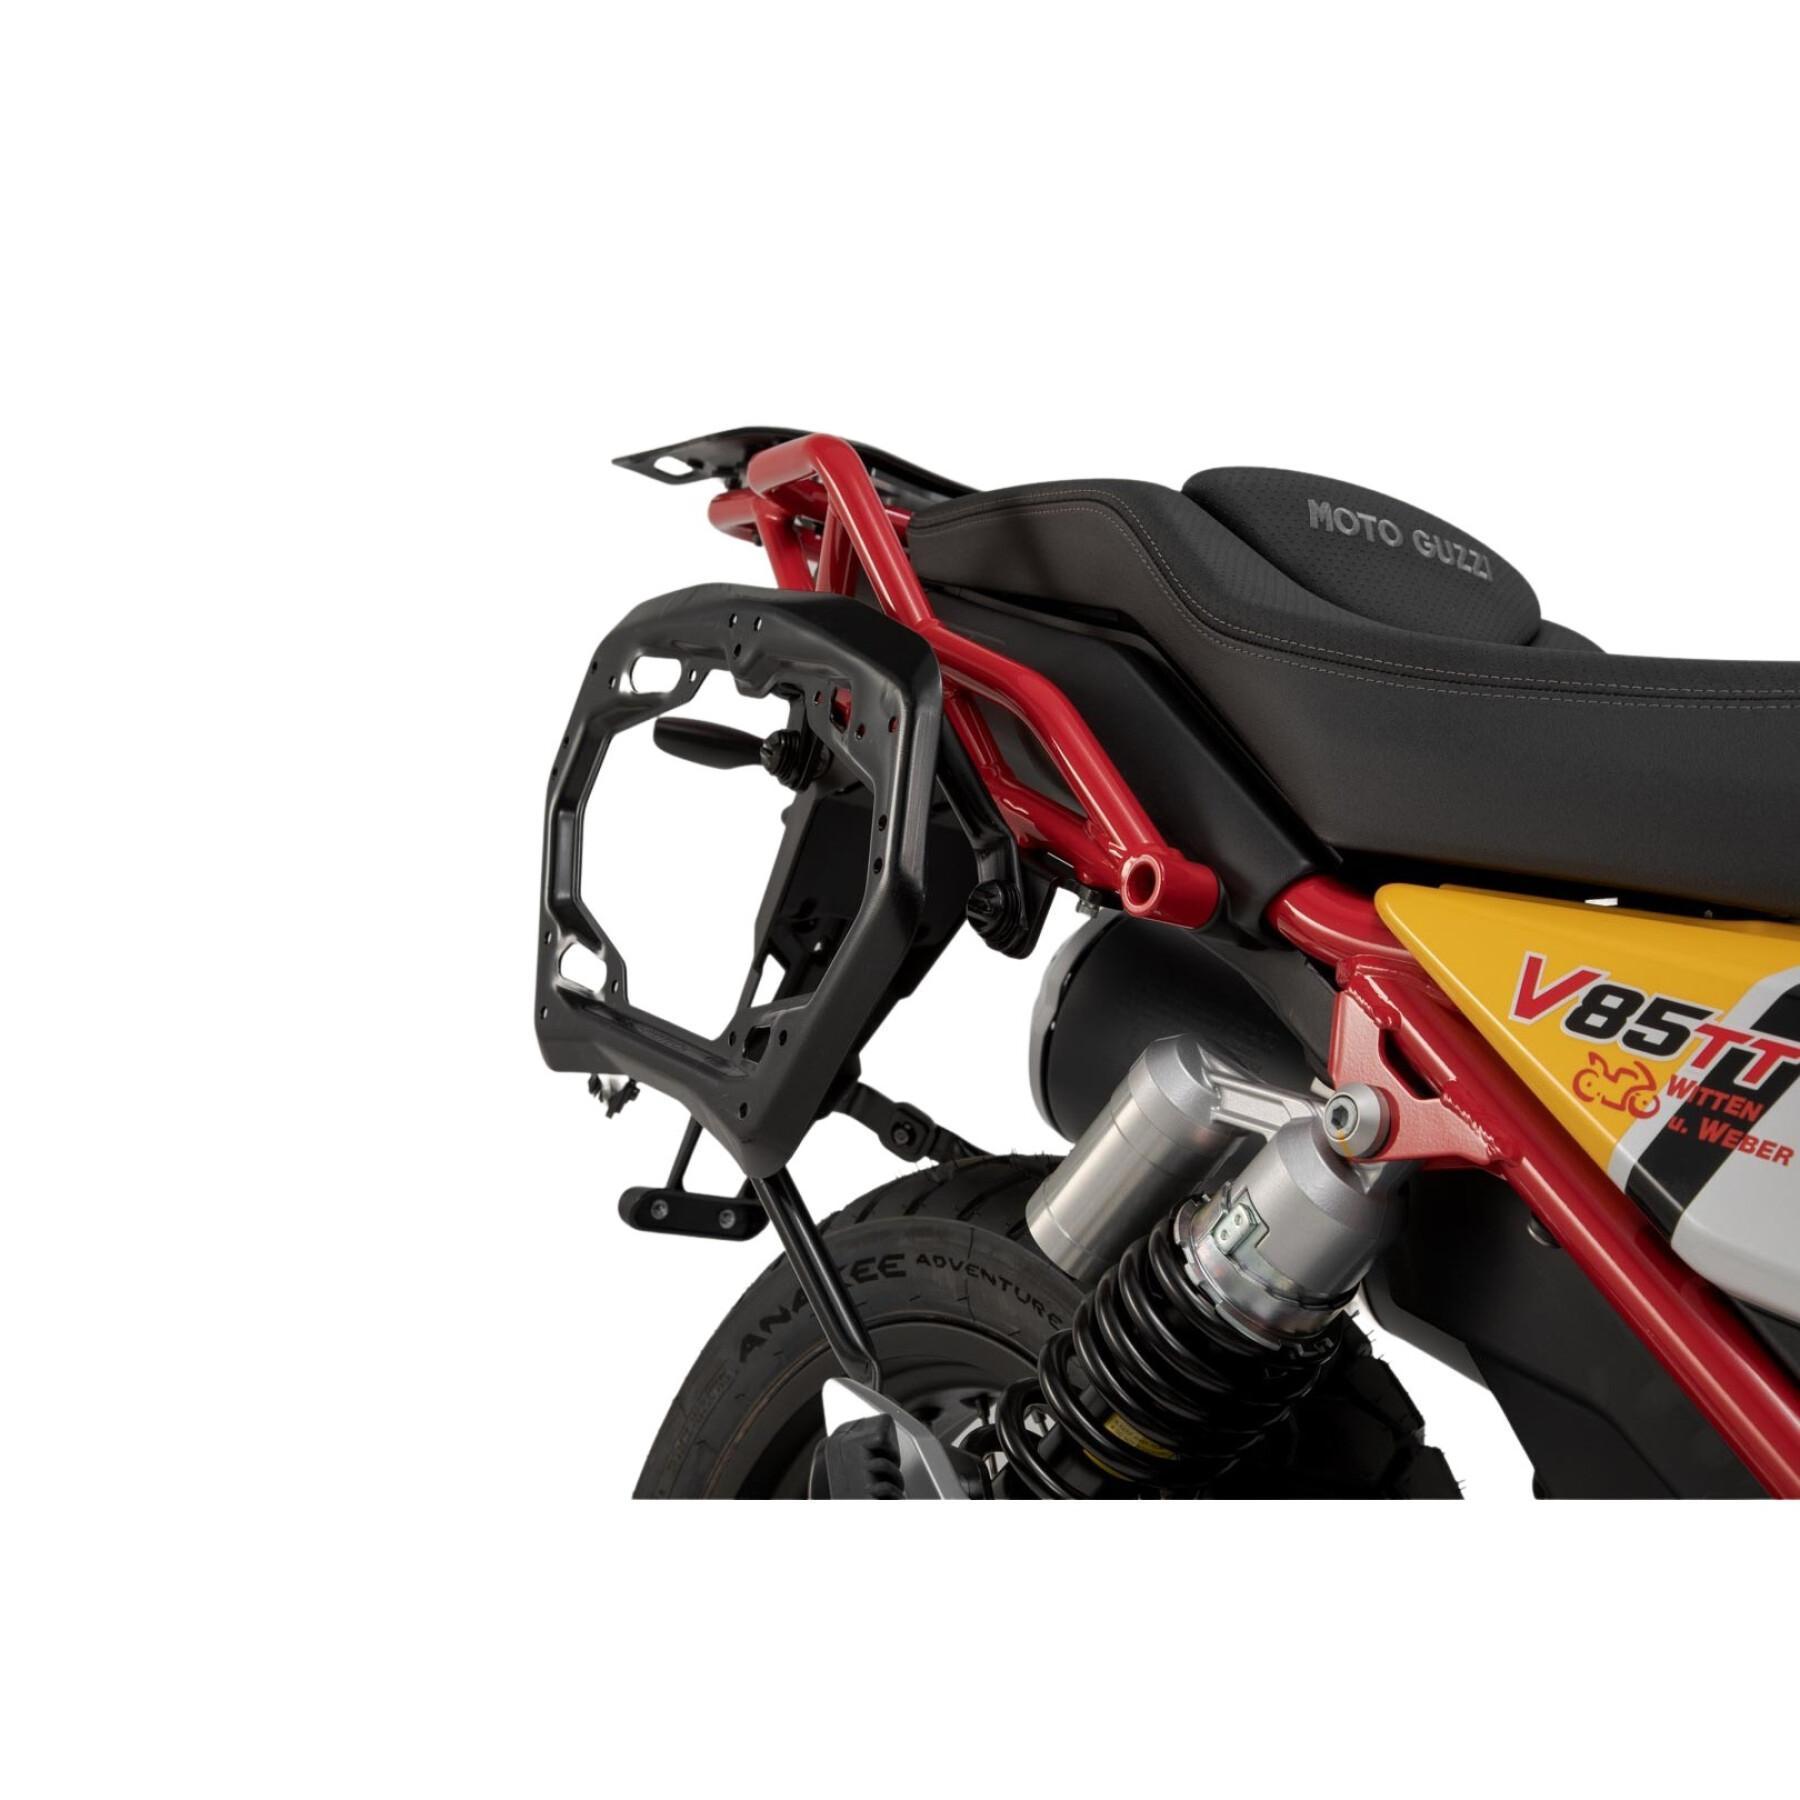 Soporte de la maleta lateral de la moto Sw-Motech Pro. Moto Guzzi V85 Tt (19-)